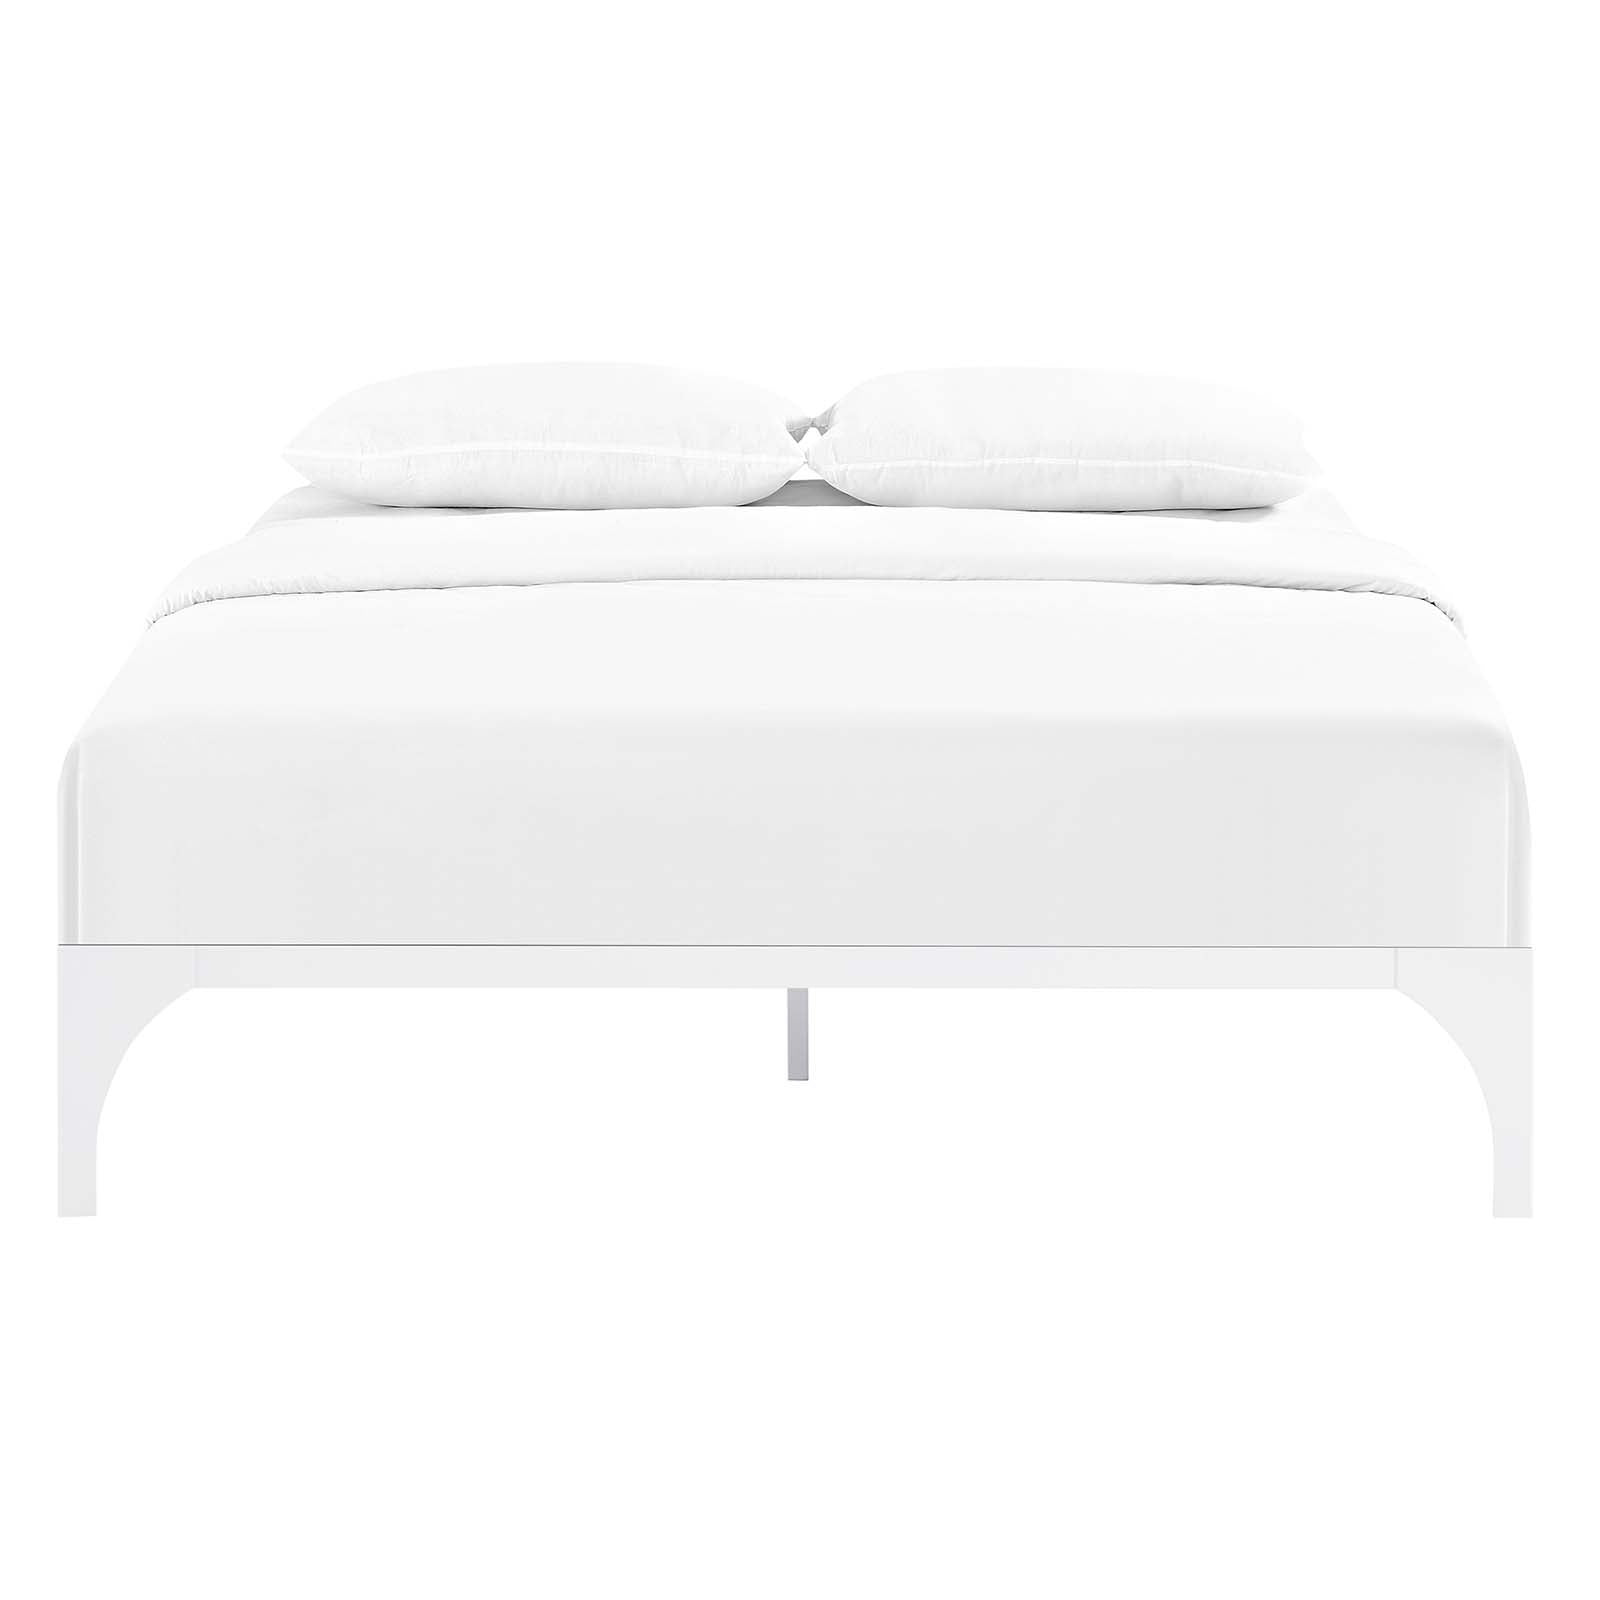 Modway Beds - Ollie Full Bed Frame White